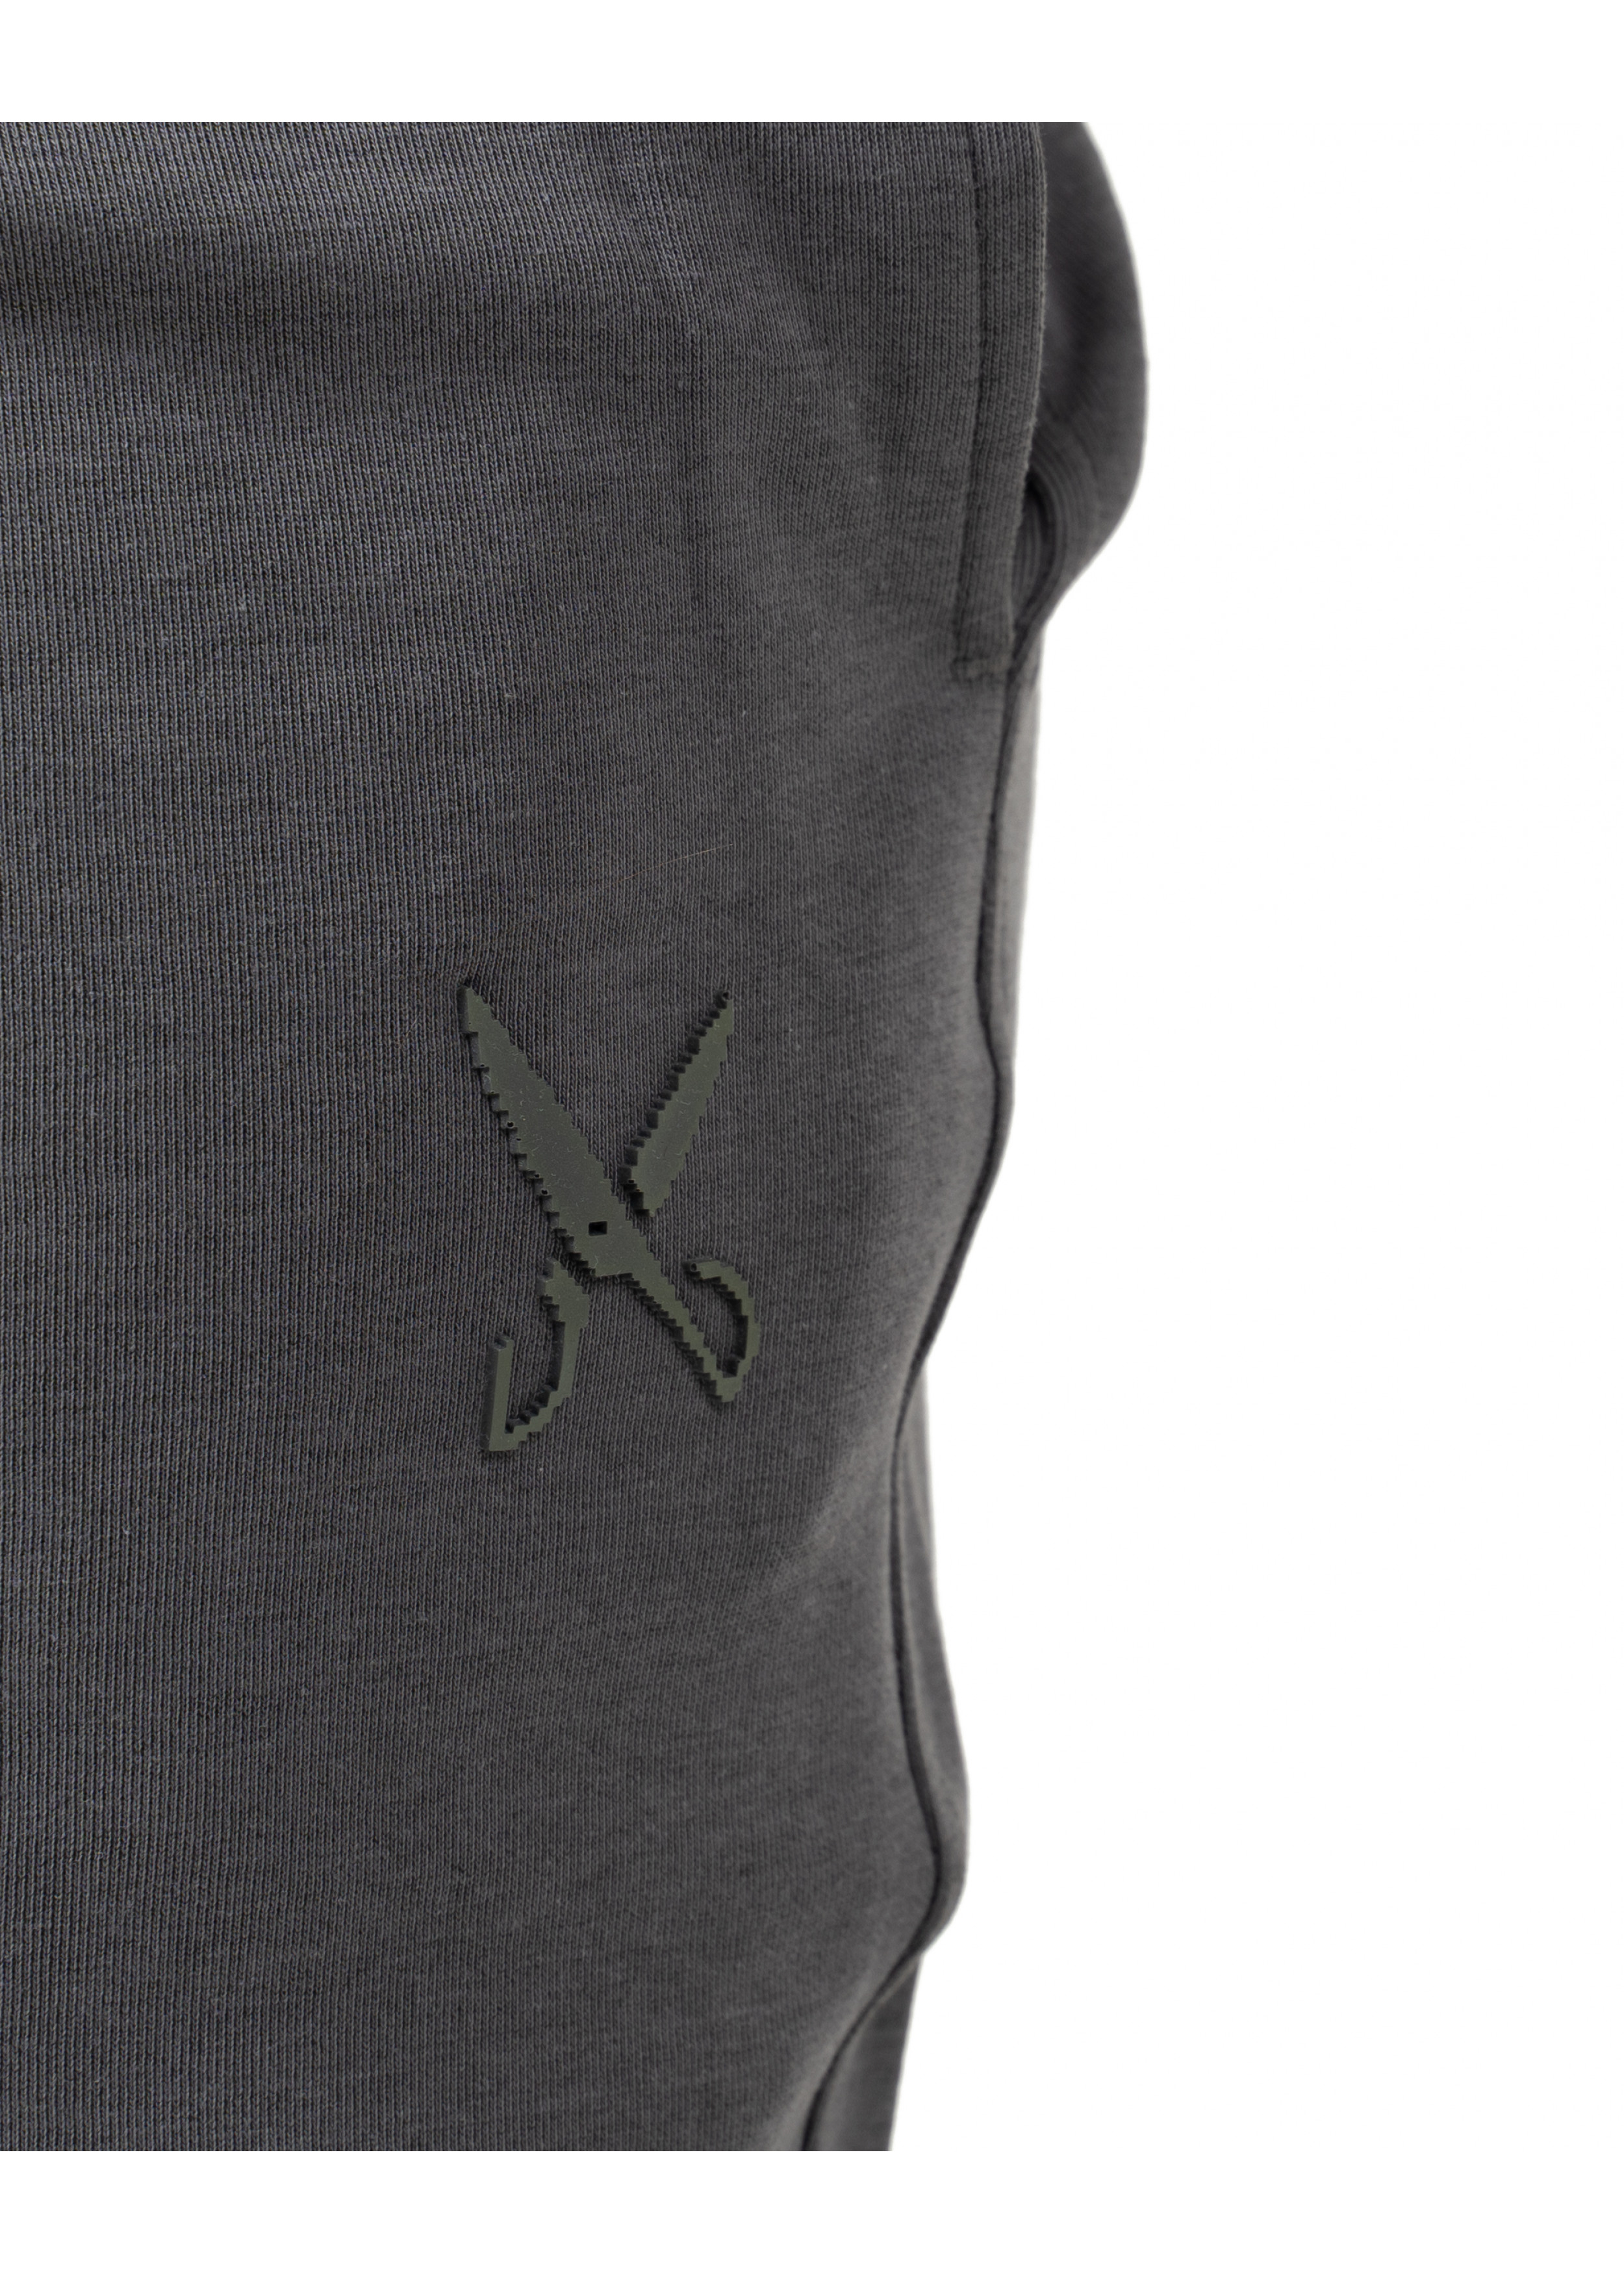  Pants zigzag logo - Gray